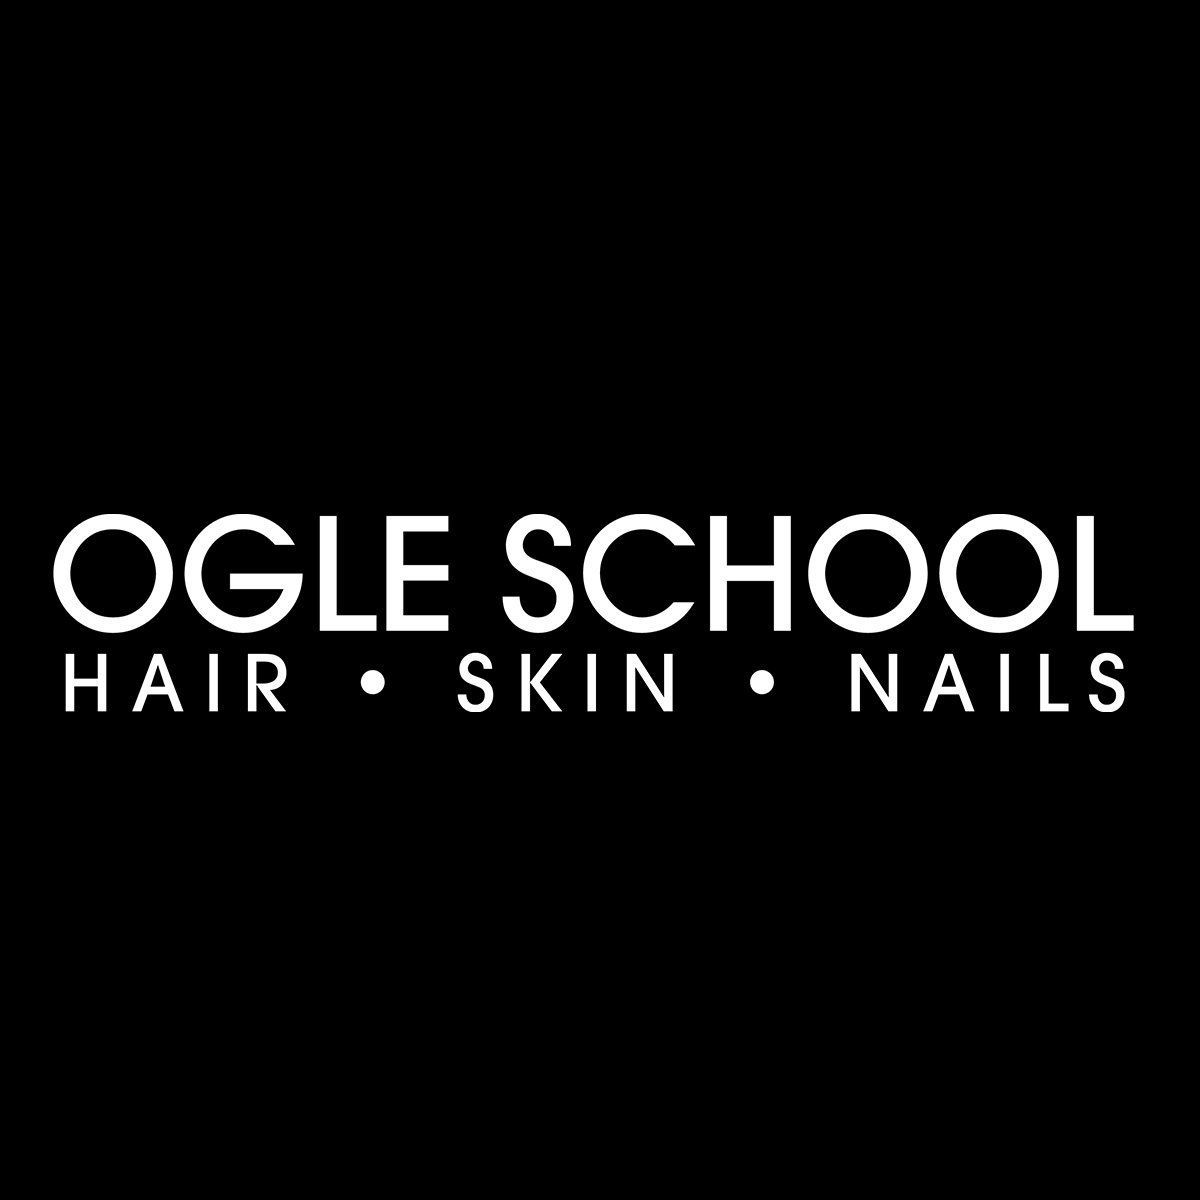 Ogle School - Licensed Aesthetician in the Dallas - Fort Worth area.